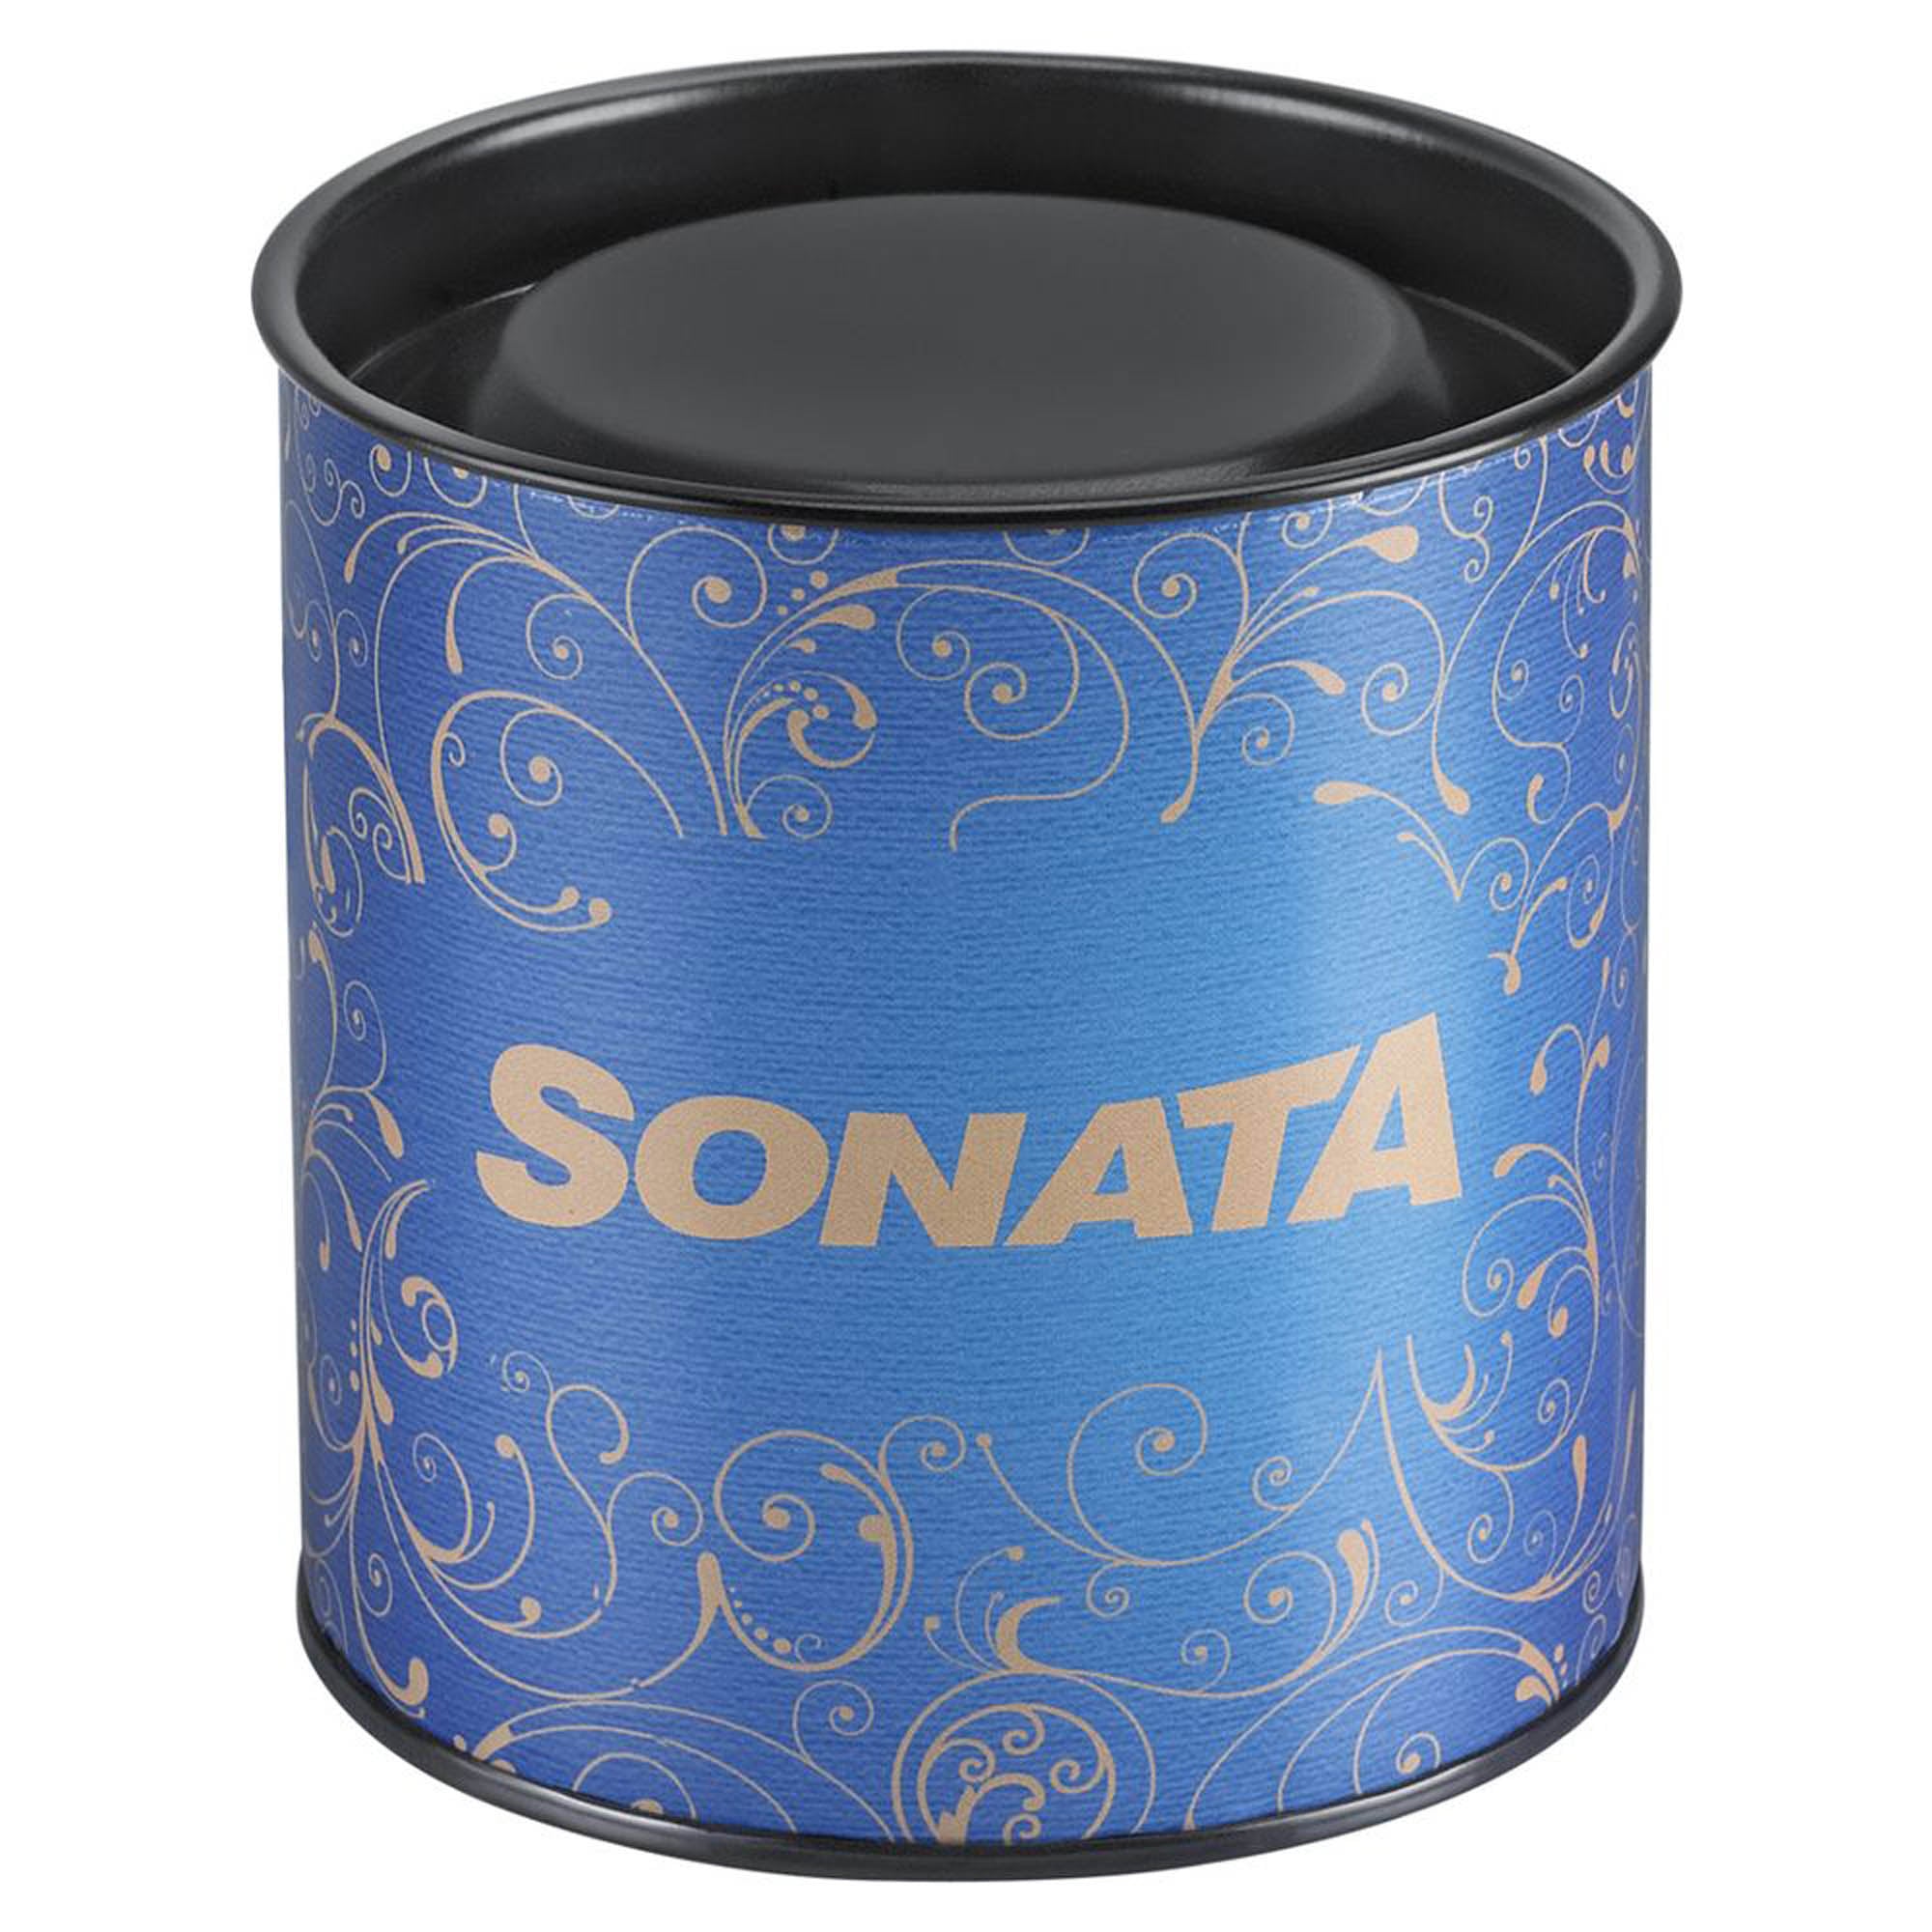 Sonata Quartz Analog Stainless Steel Strap Watch for Men